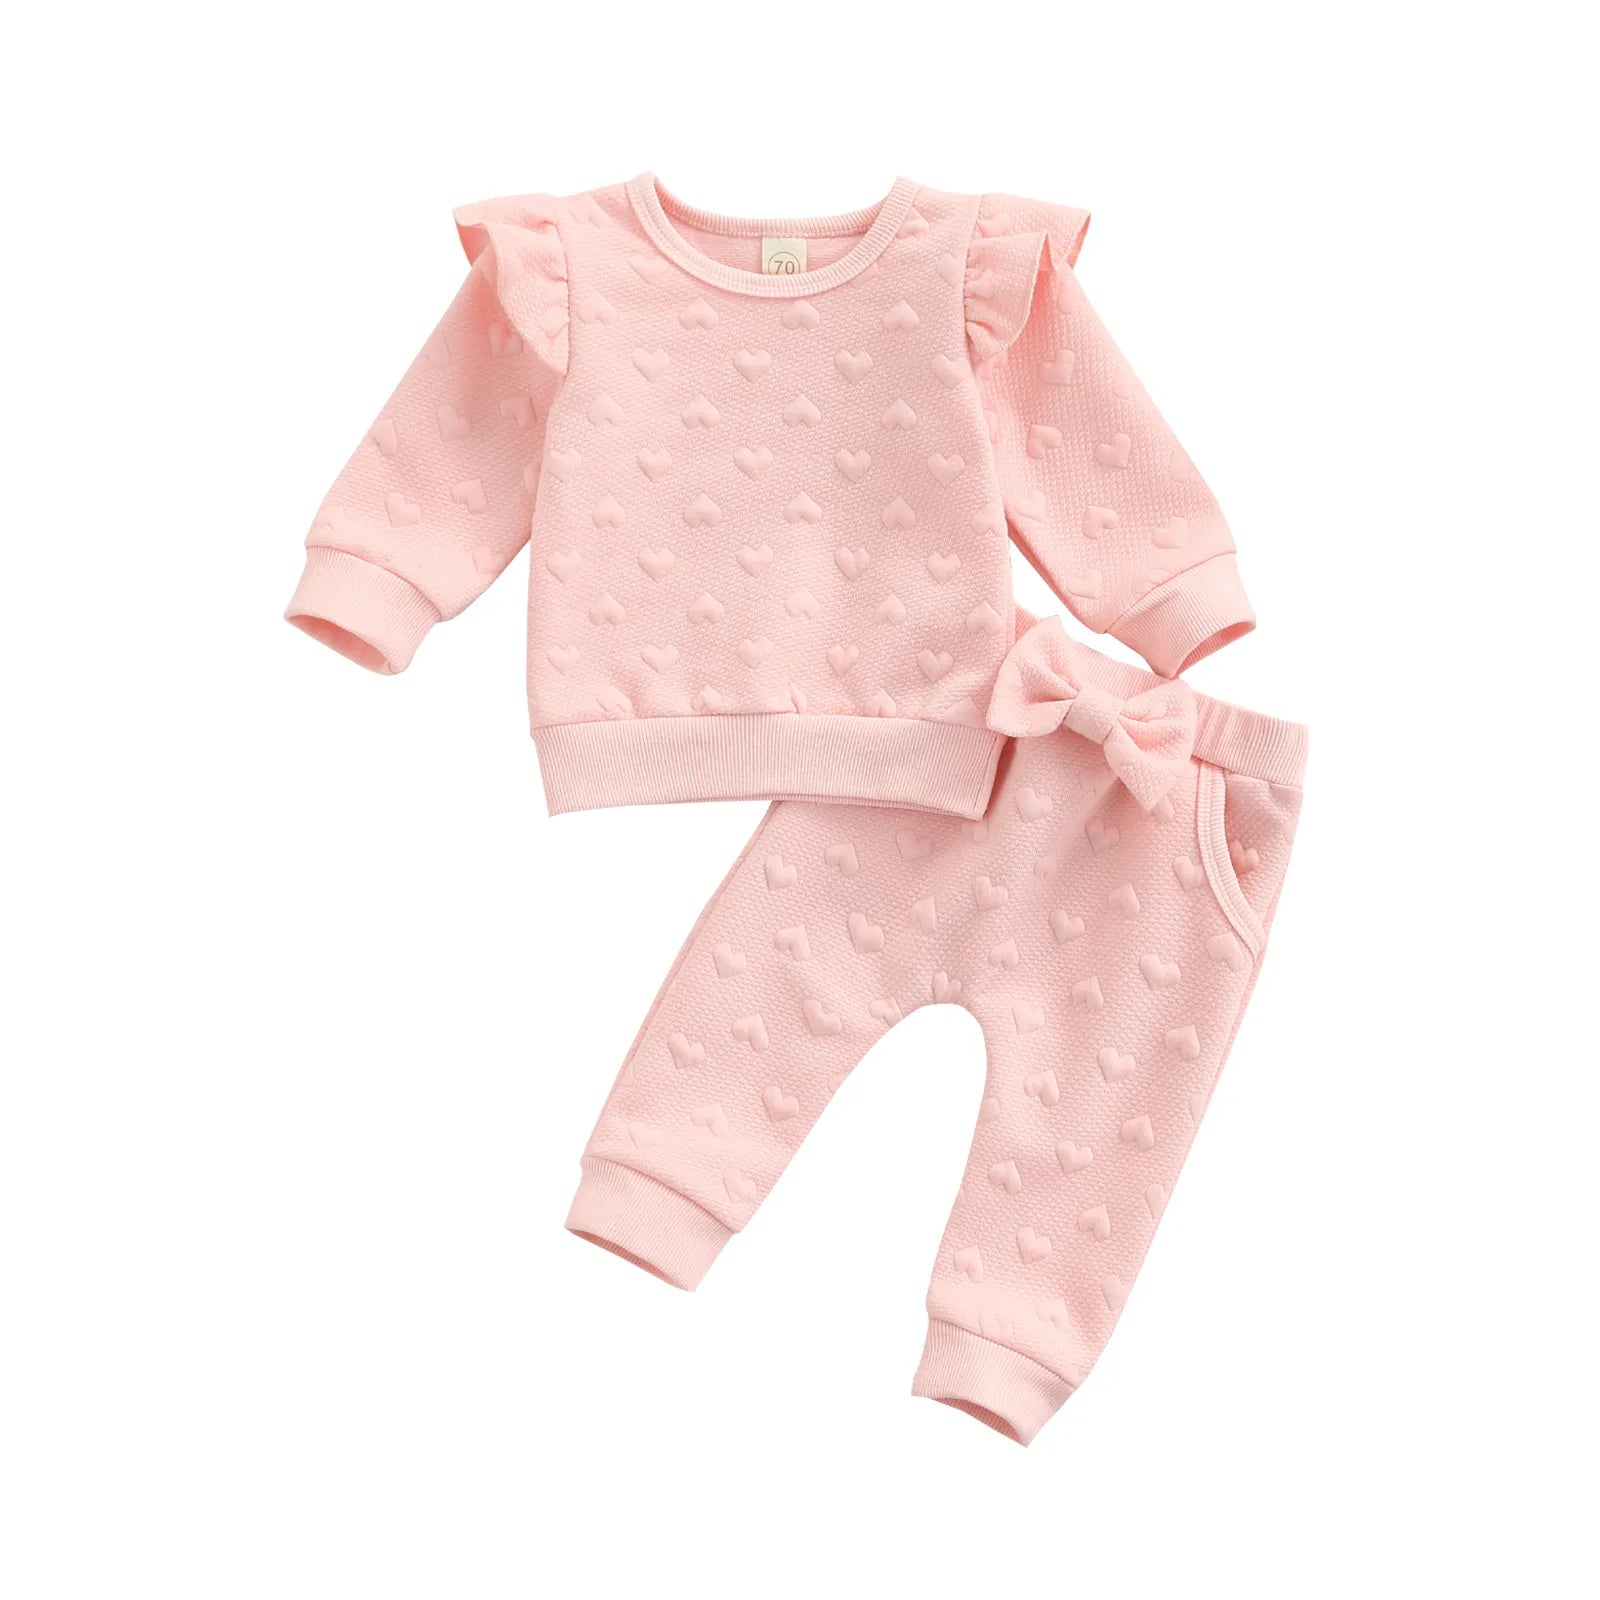 Newborn Infant Baby Girl 2Pcs Autumn Clothing Set Long Sleeve Heart Printed Top Shirt Long Pants